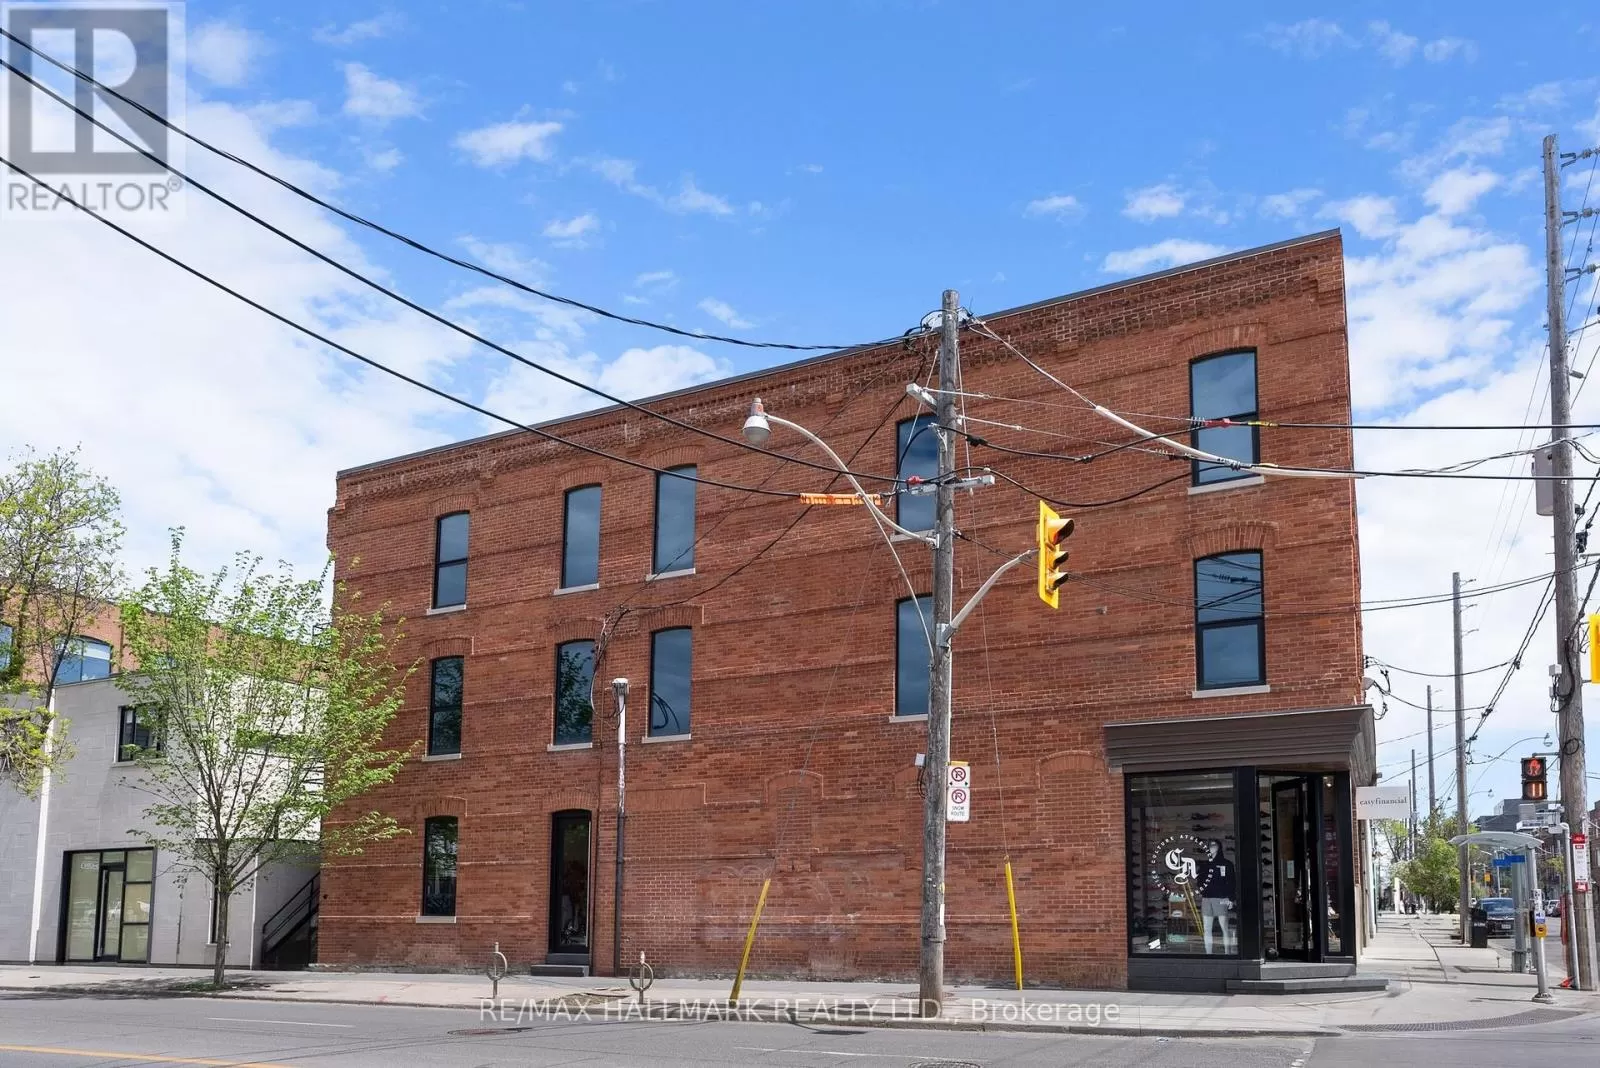 Offices for rent: 300 - 972 Queen Street E, Toronto, Ontario M4M 1K1